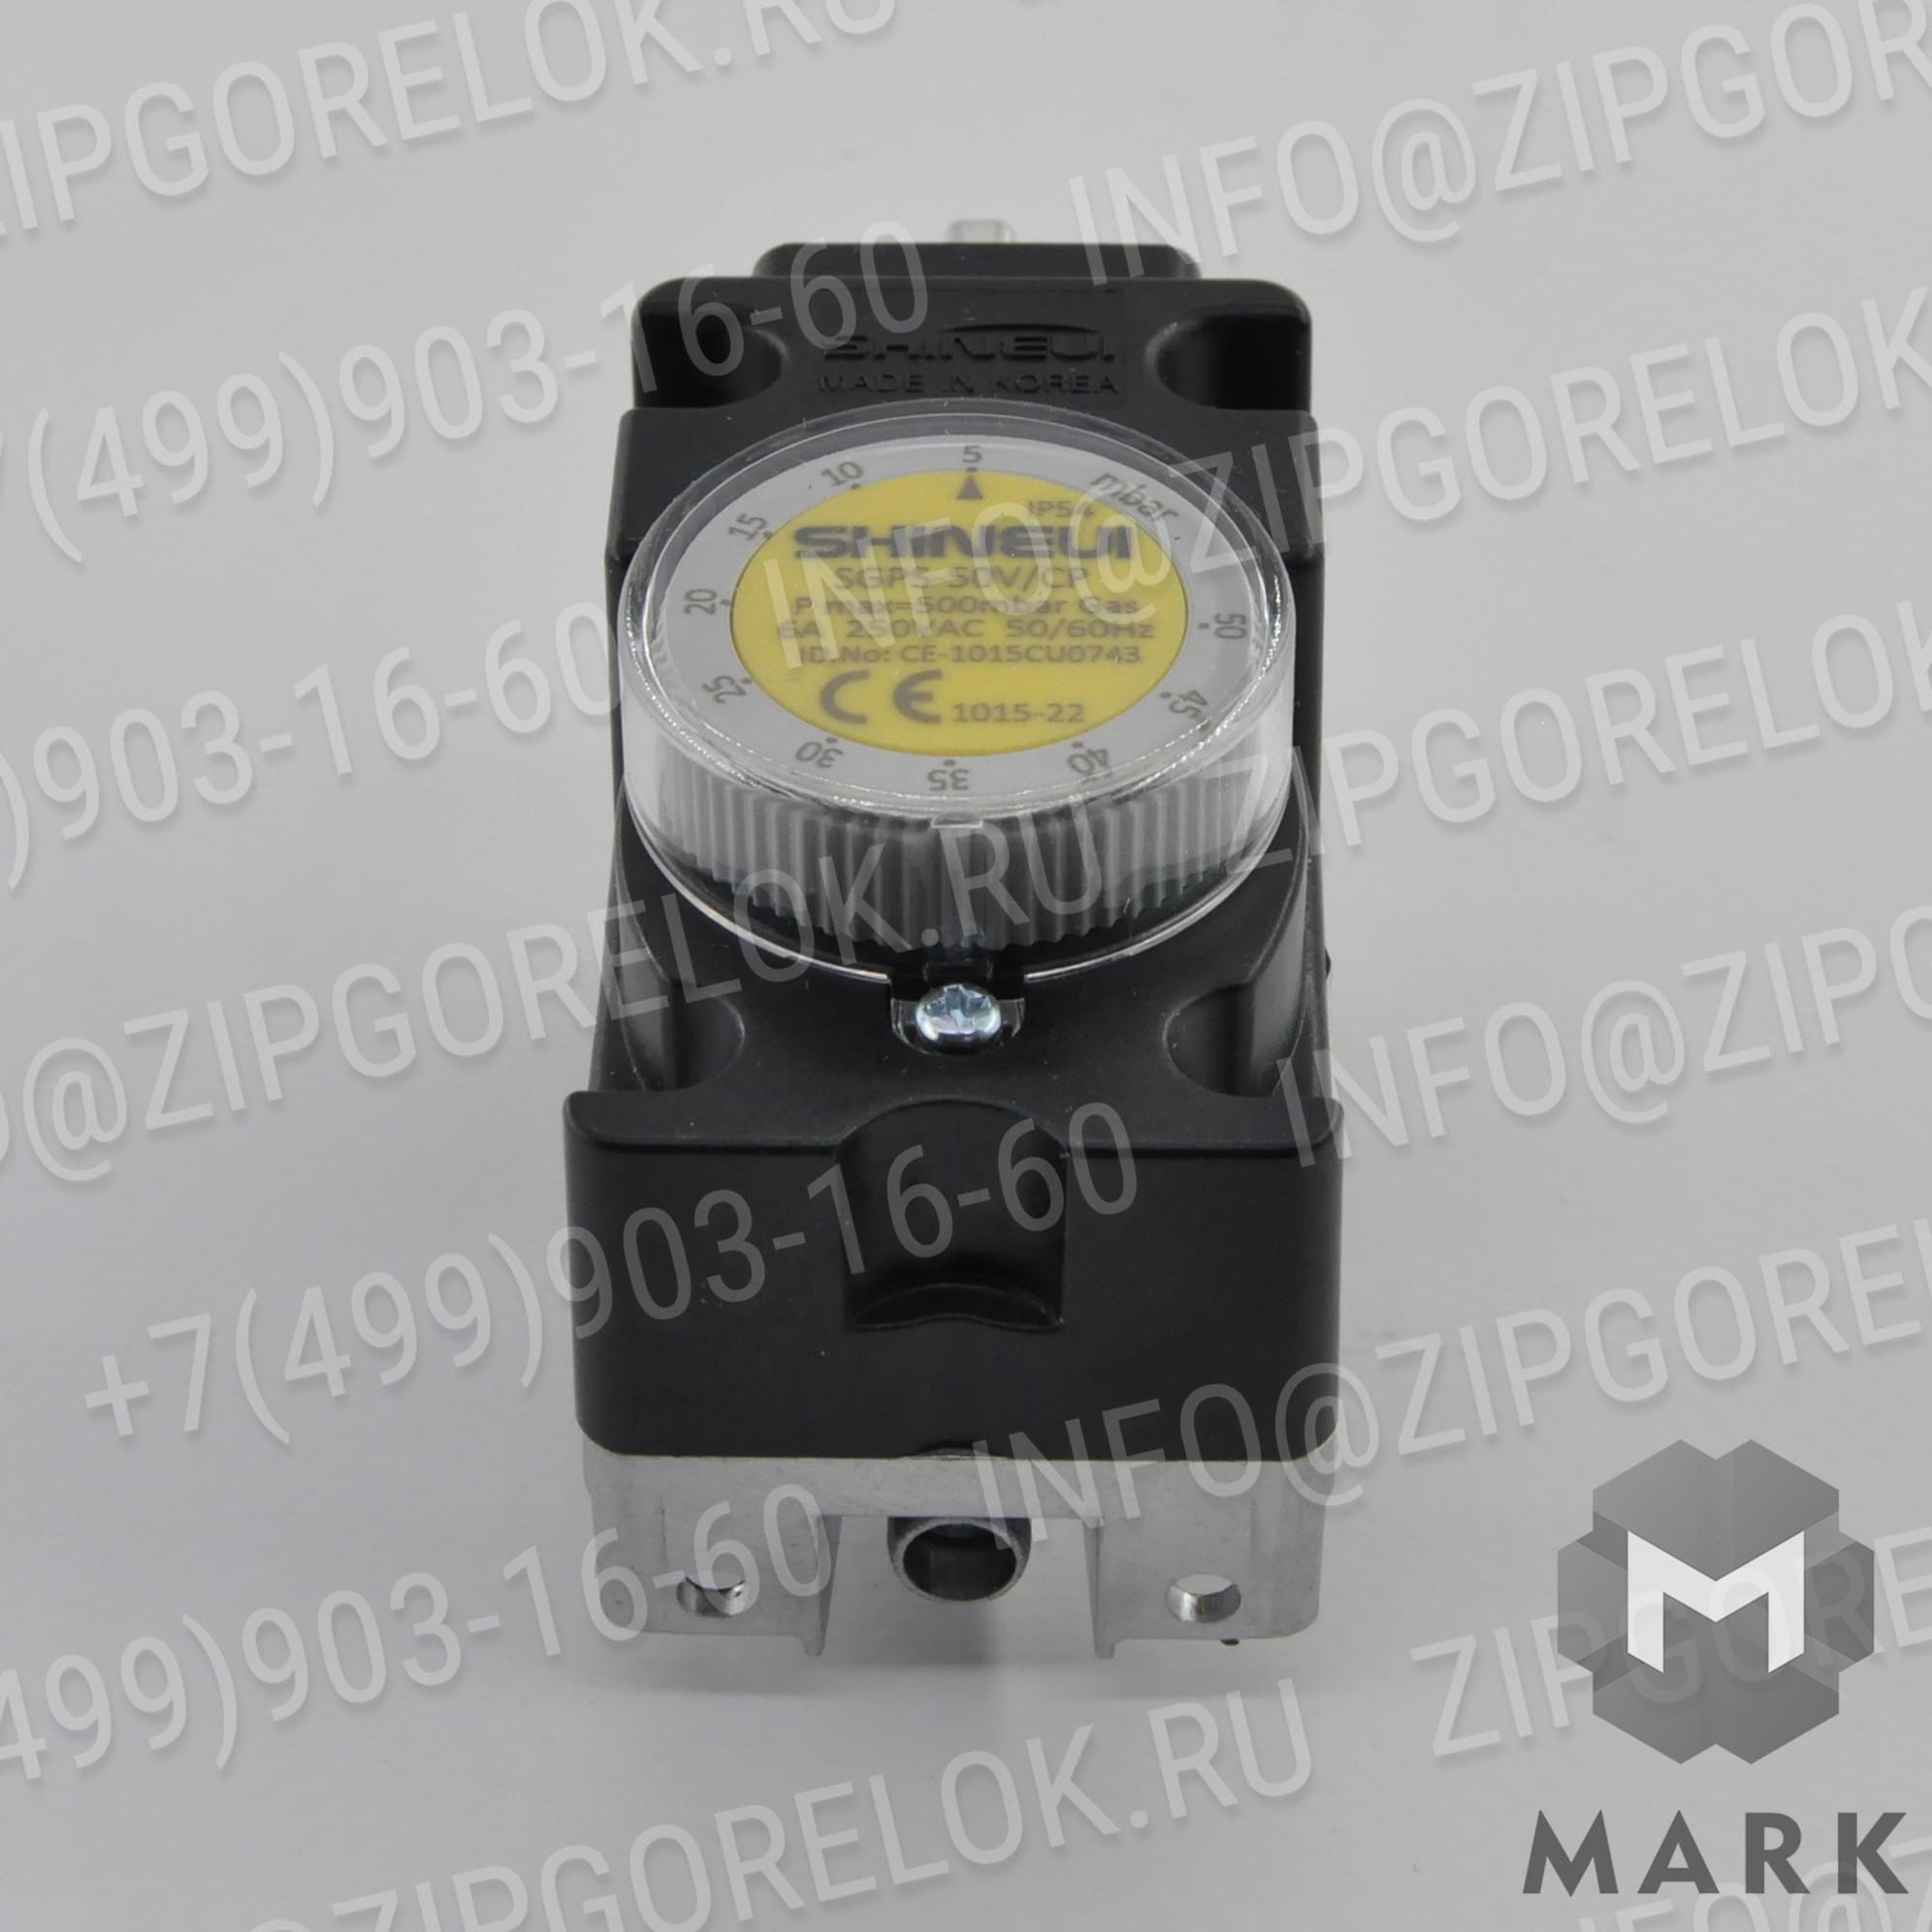 SGPS-50V-CP Купить 4366182 Фильтр Riello / Риелло | Zipgorelok.ru